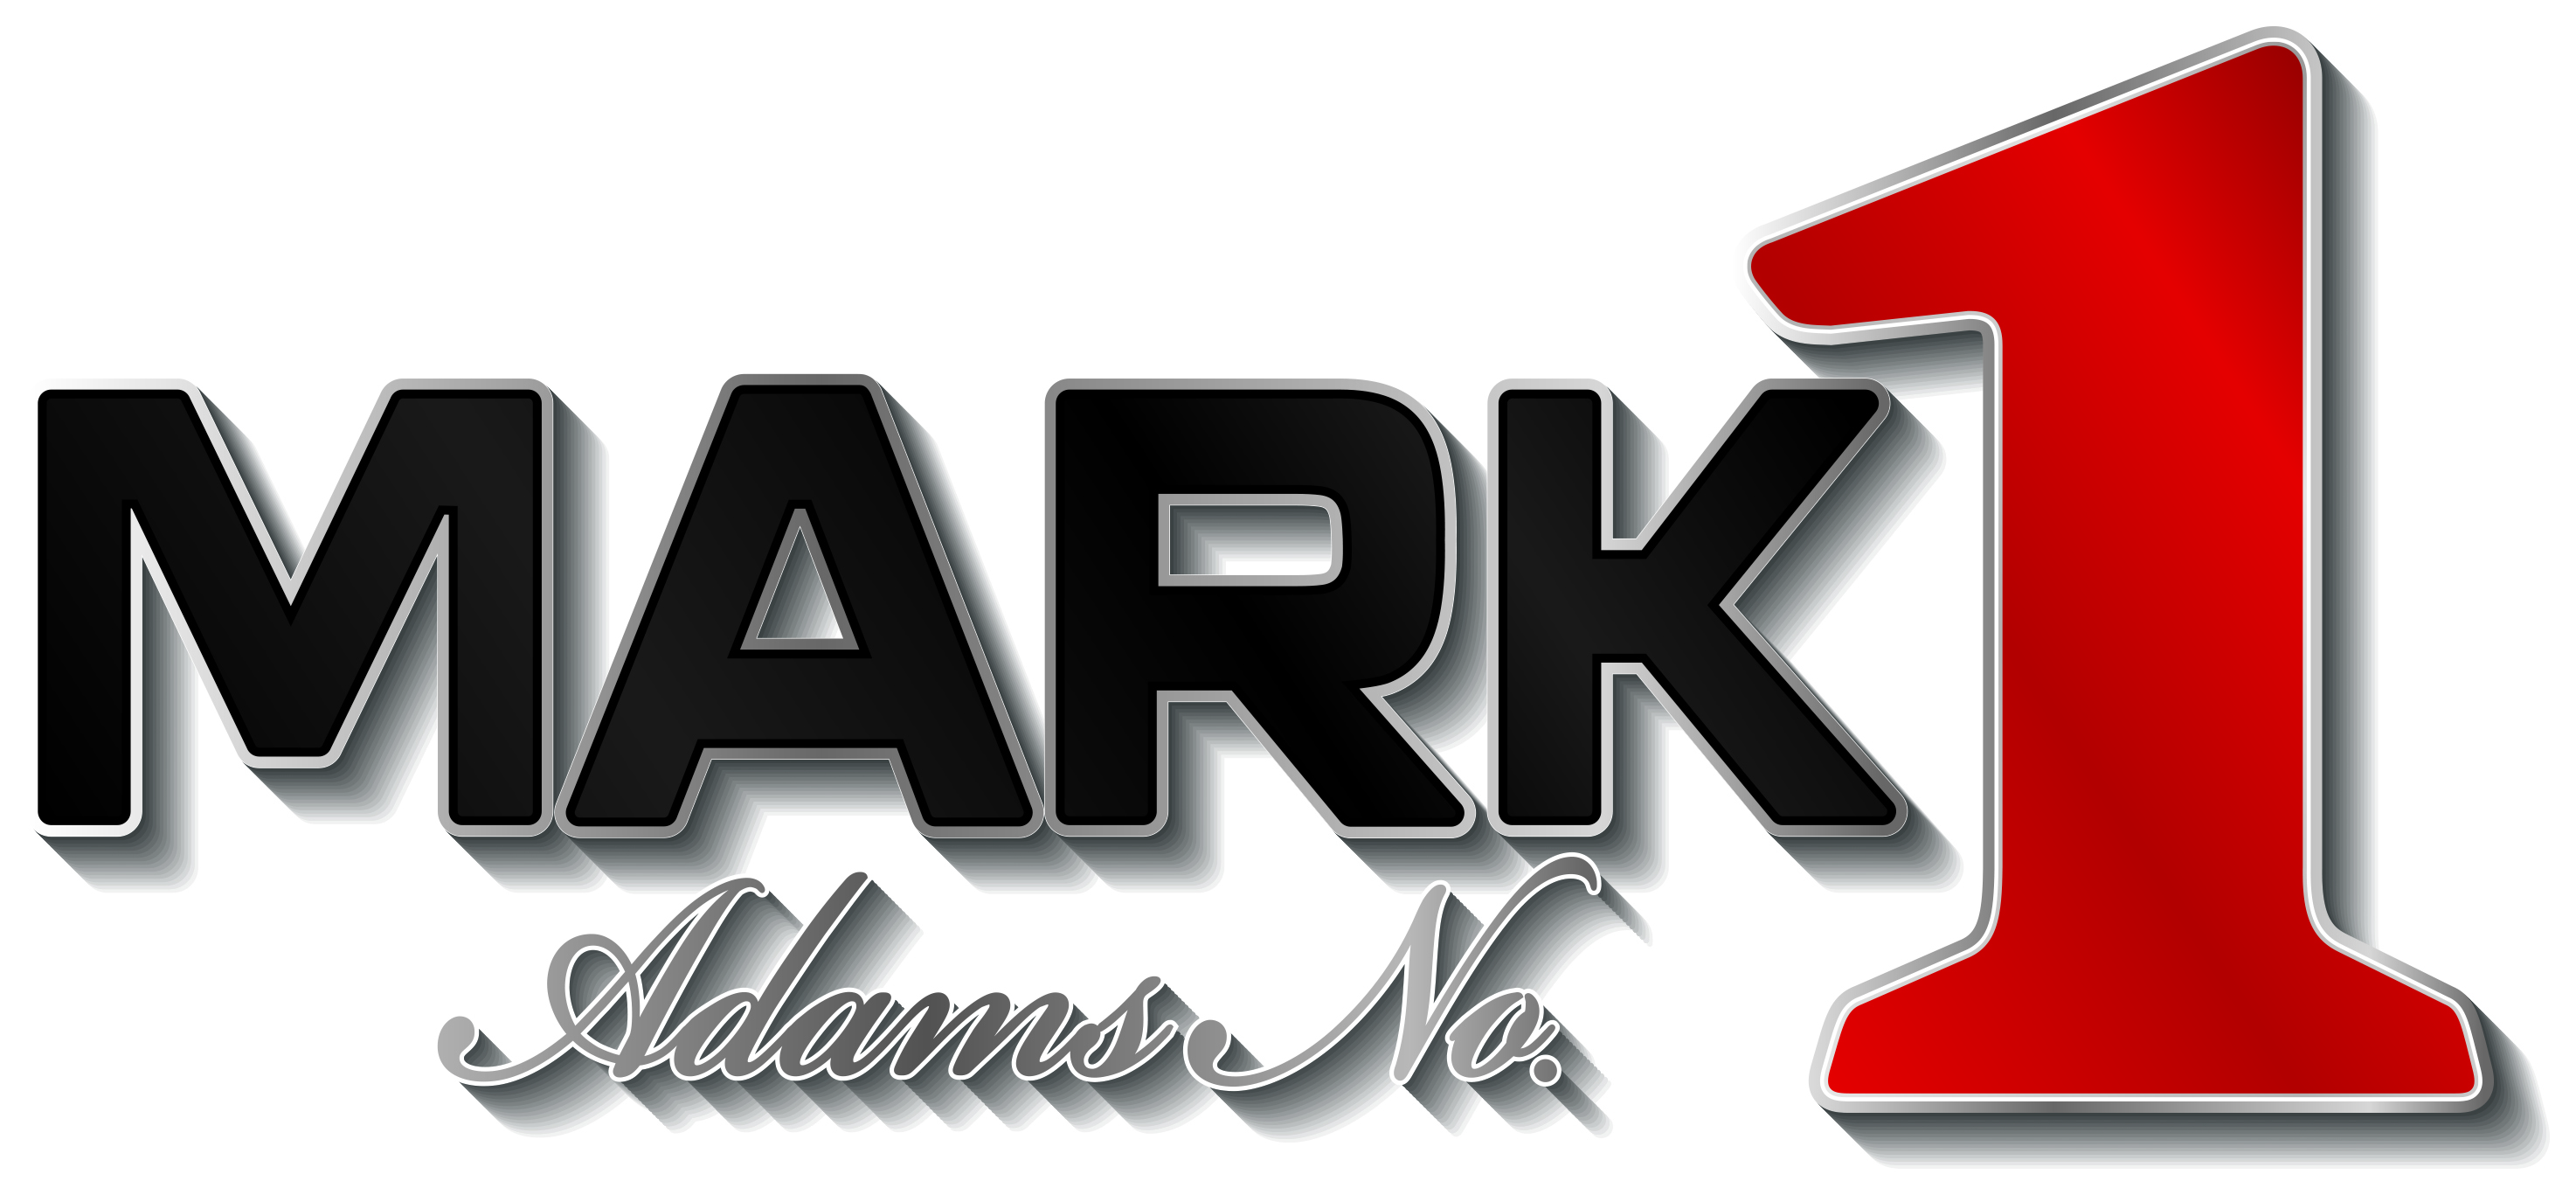 Mark_Adams_No1_Logo_300dpi_CMYK